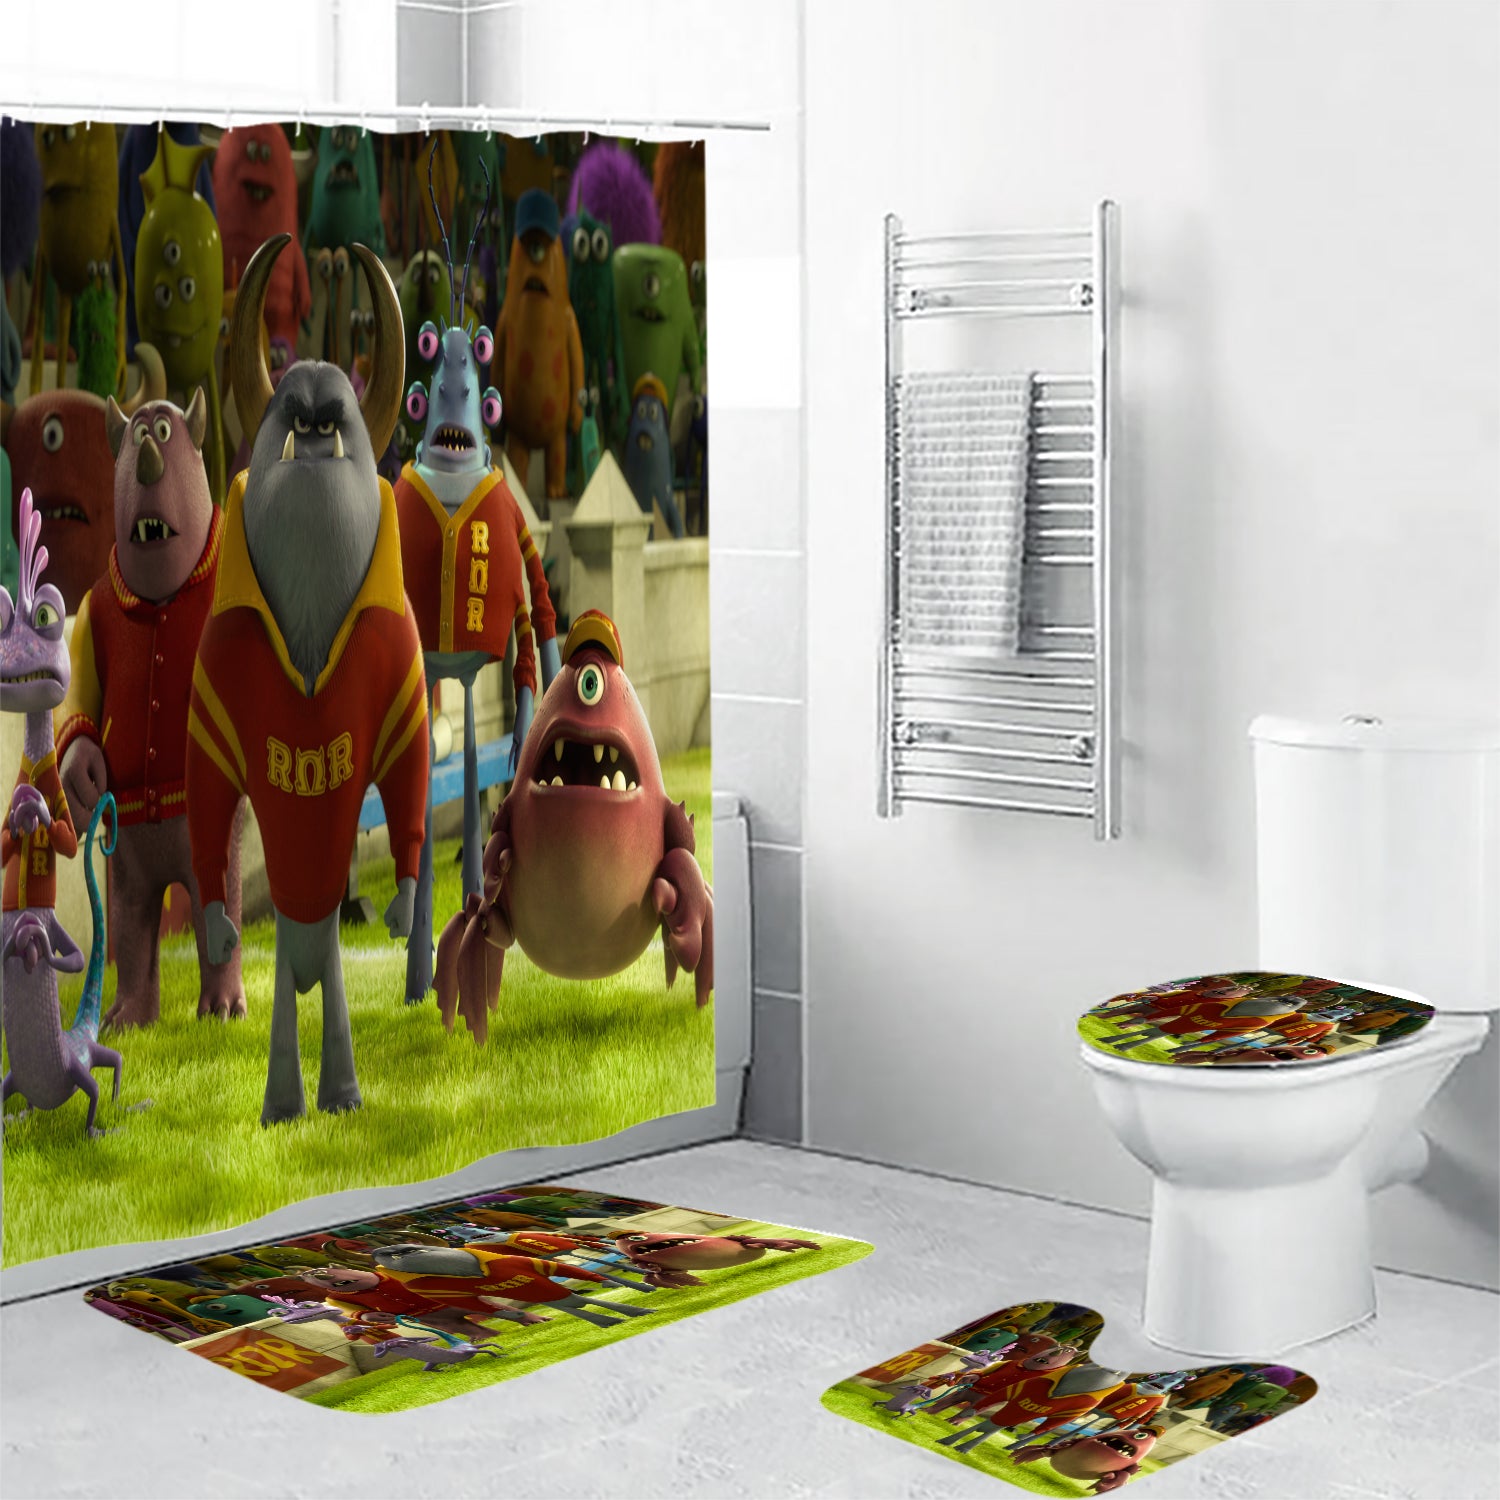 Characters v25 Monsters Inc Monsters University Movie Disney Pixar Waterproof Shower Curtain Non-Slip Toilet Lid Cover Bath Mat - Bathroom Set